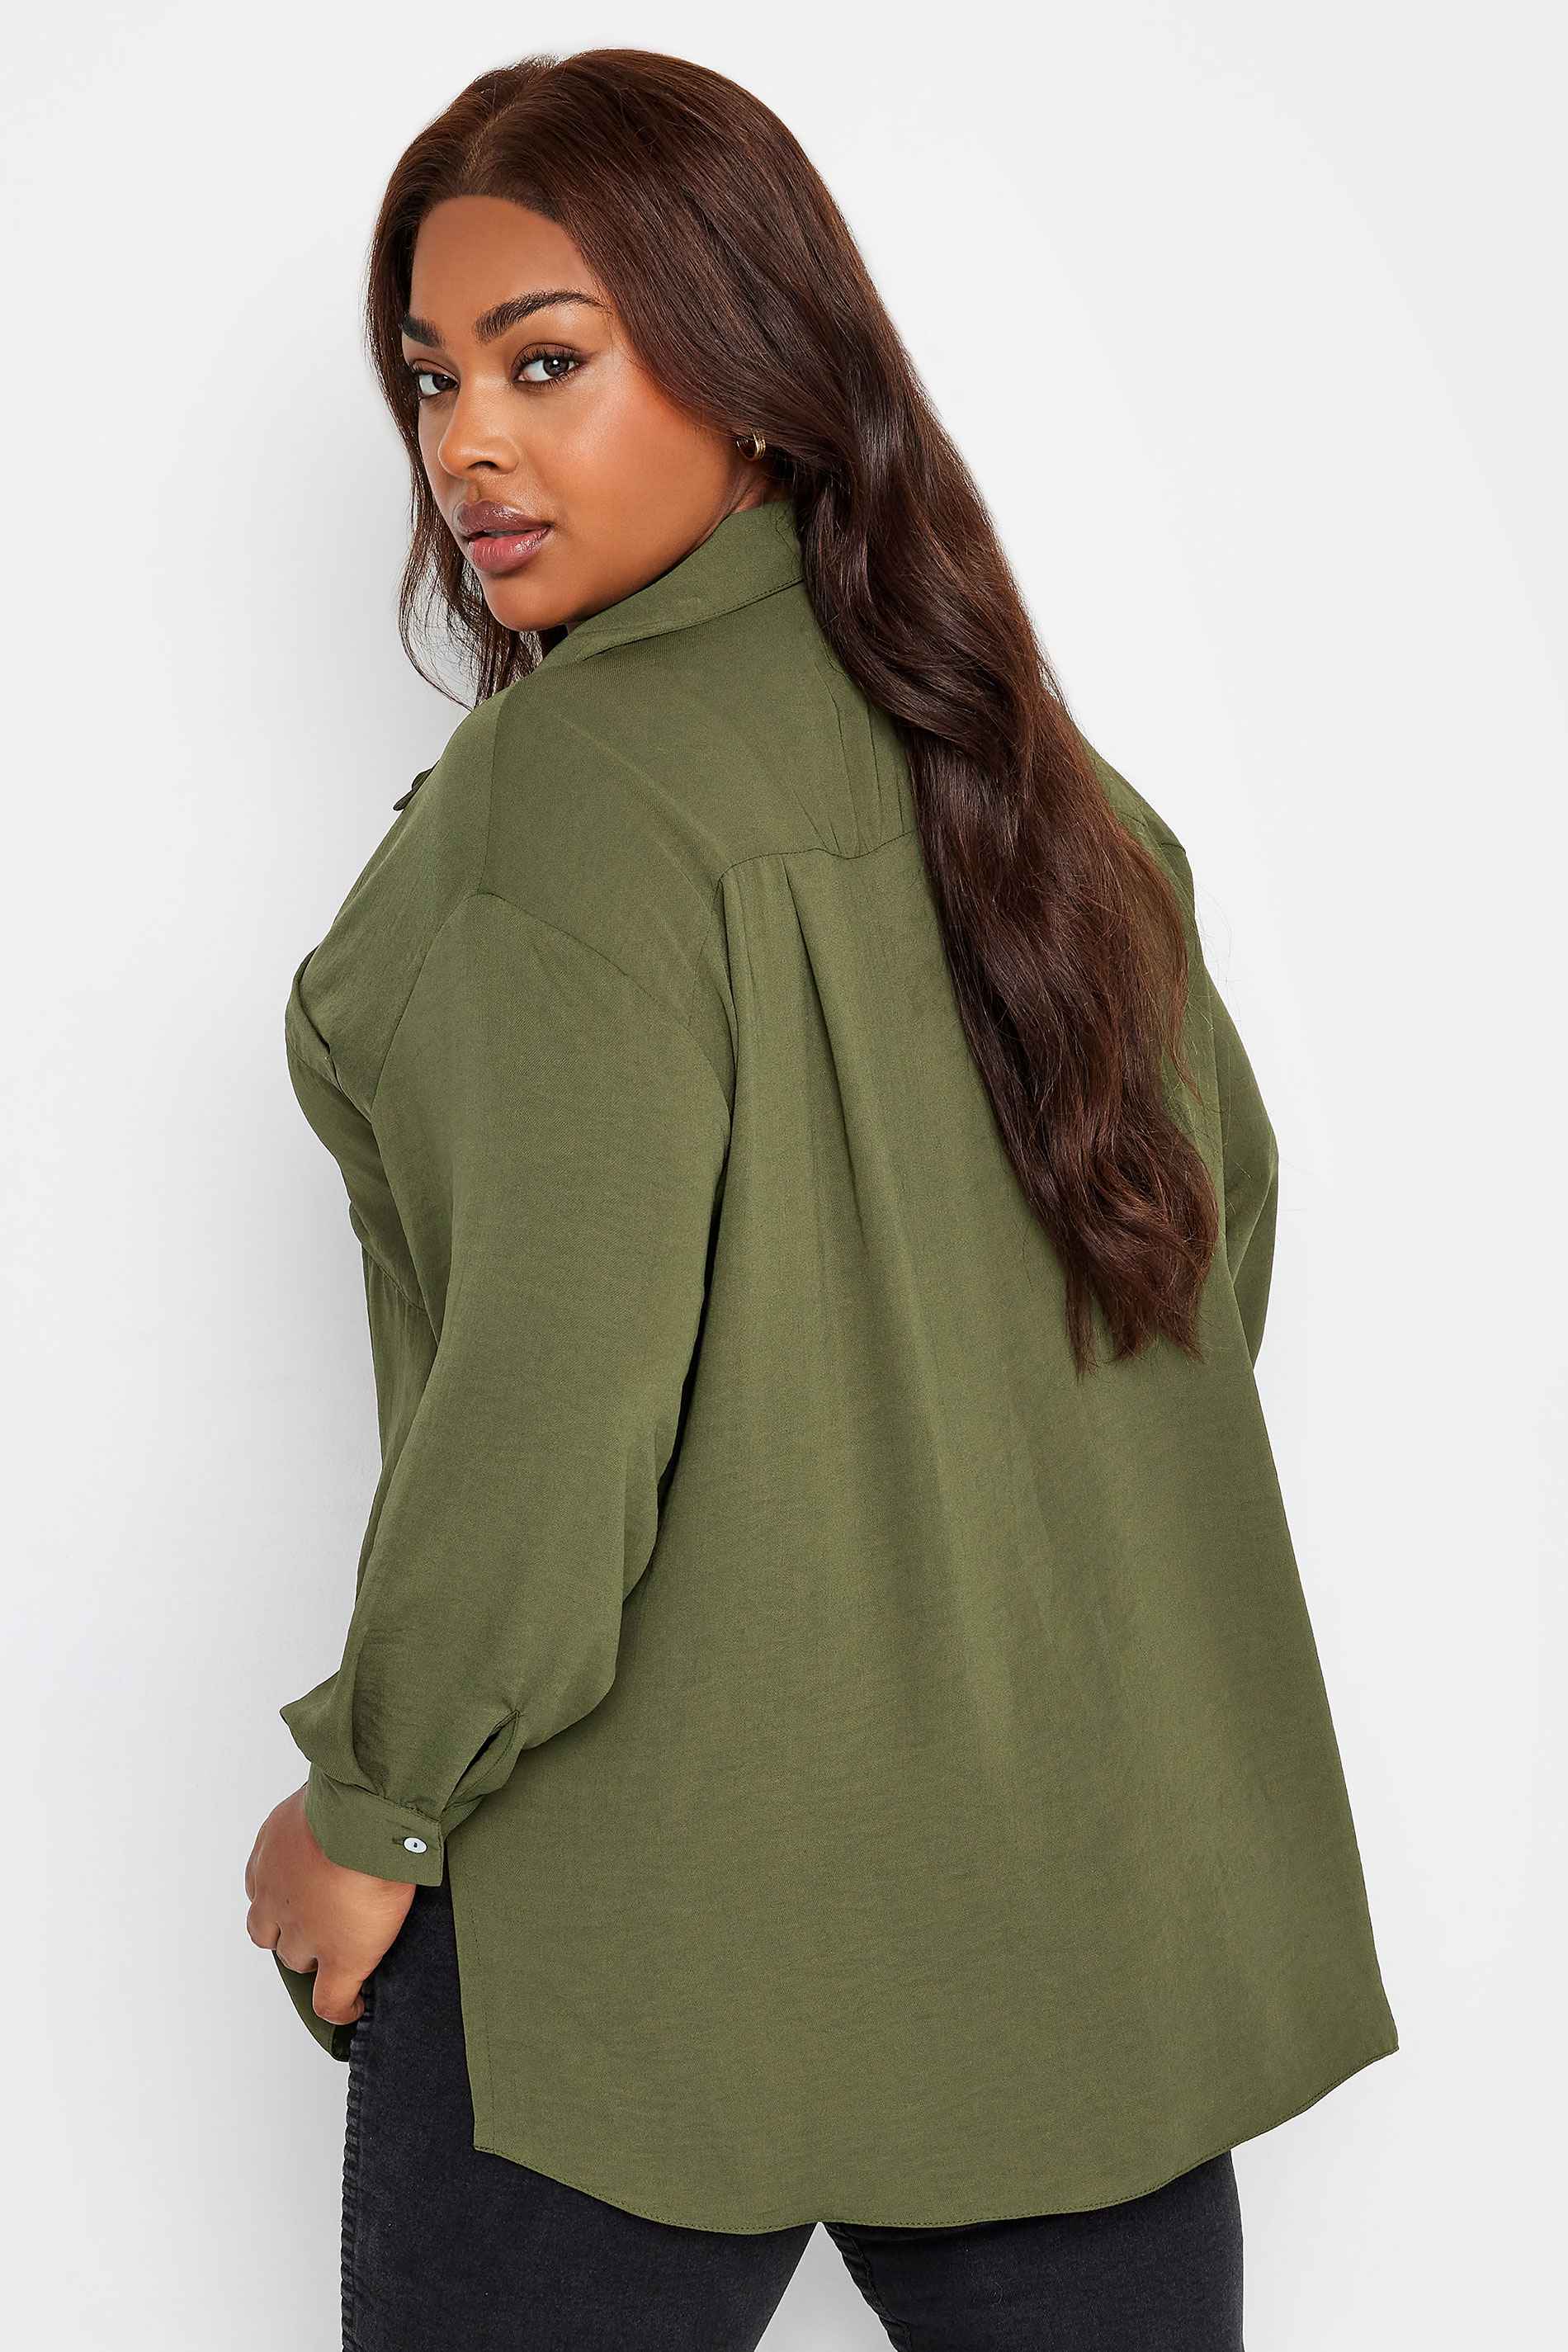 Yours Plus Size Khaki Green Cuffed Sleeve Shirt | Yours Closing 3